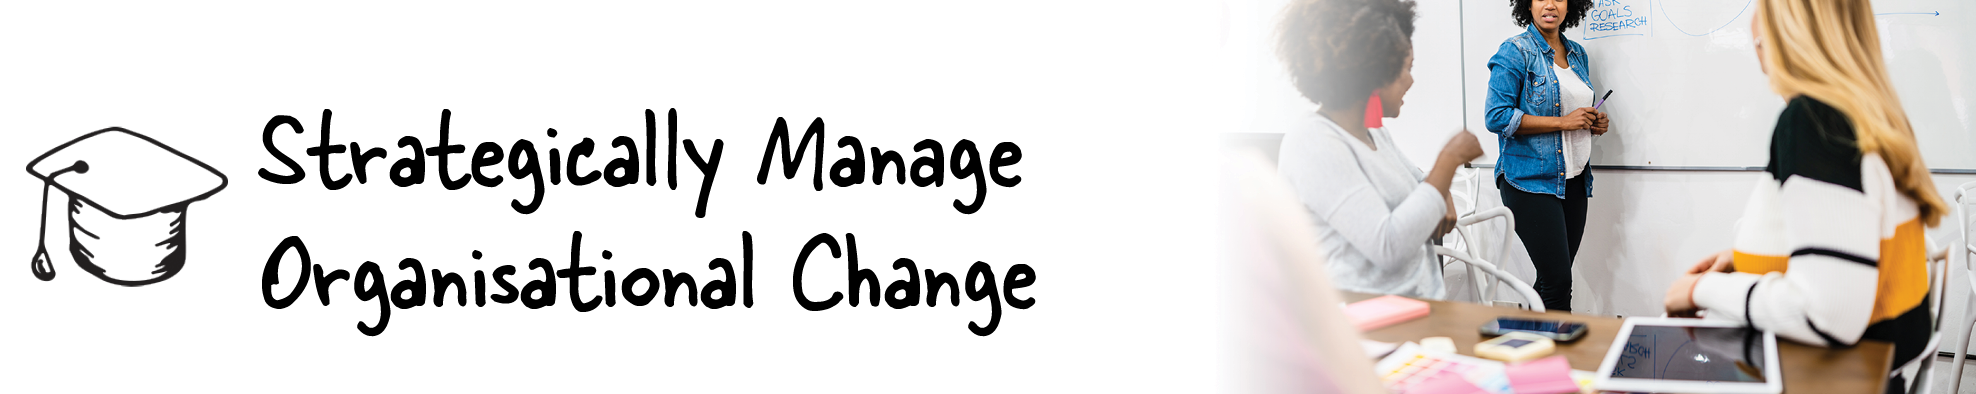 Strategically Manage Organisational Change